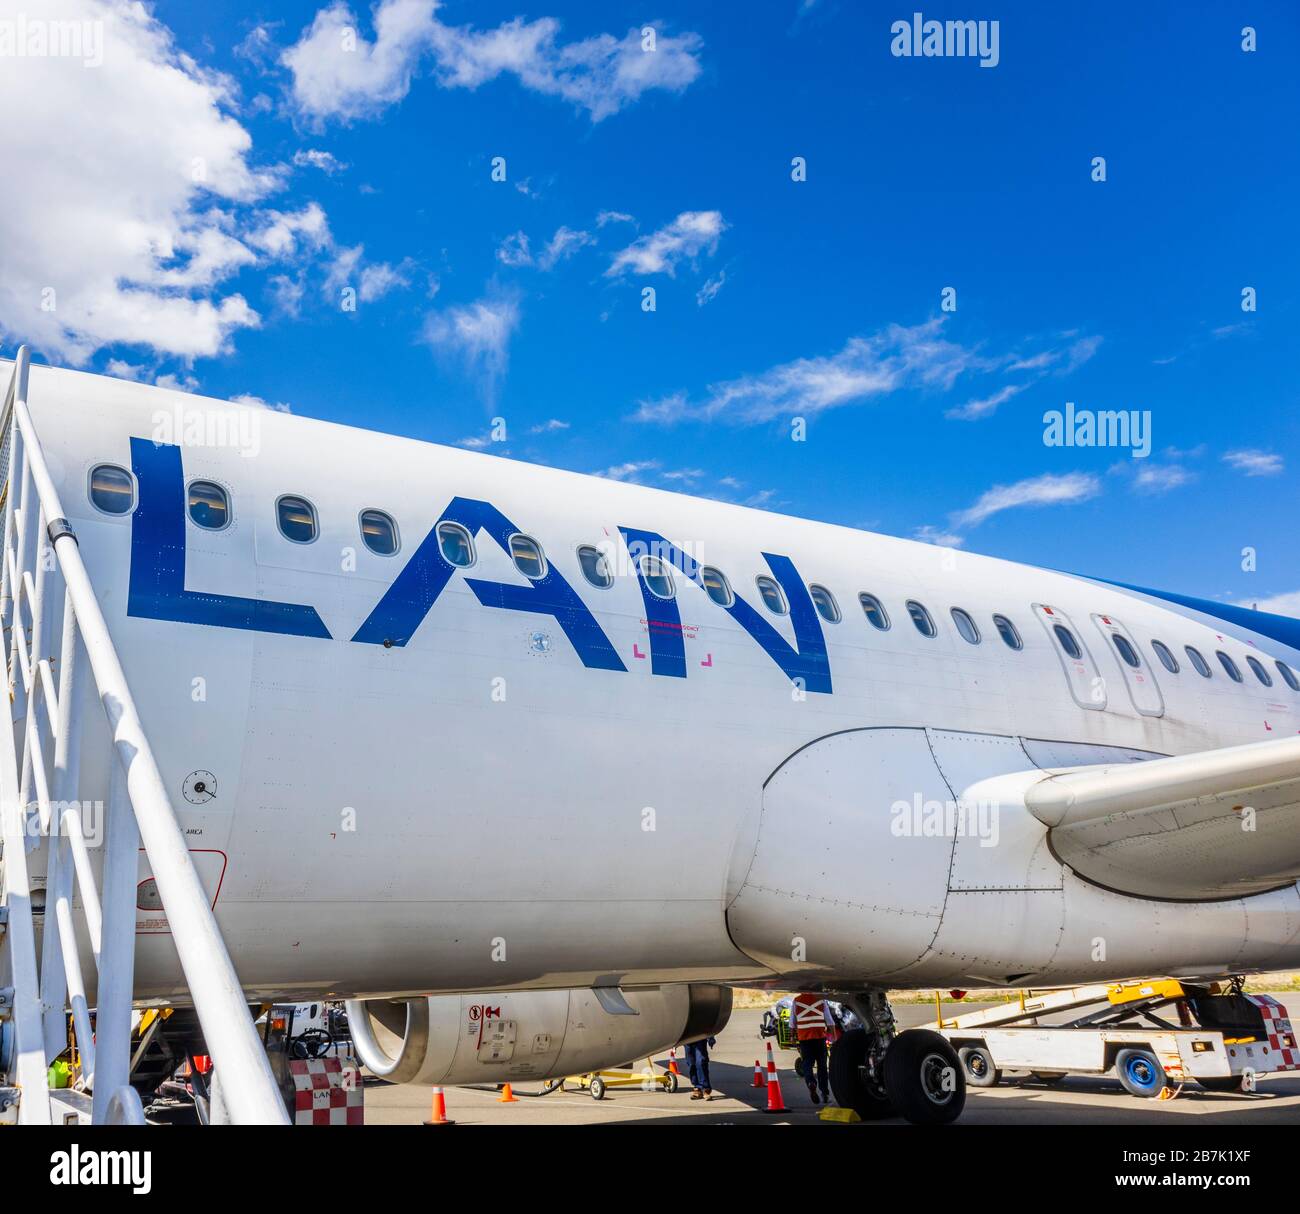 LAN (LATAM Airlines) sulla pista dell'aeroporto Teniente Julio Gallardo che serve Puerto Natales, Regione Magallanes della Patagonia, Cile meridionale Foto Stock